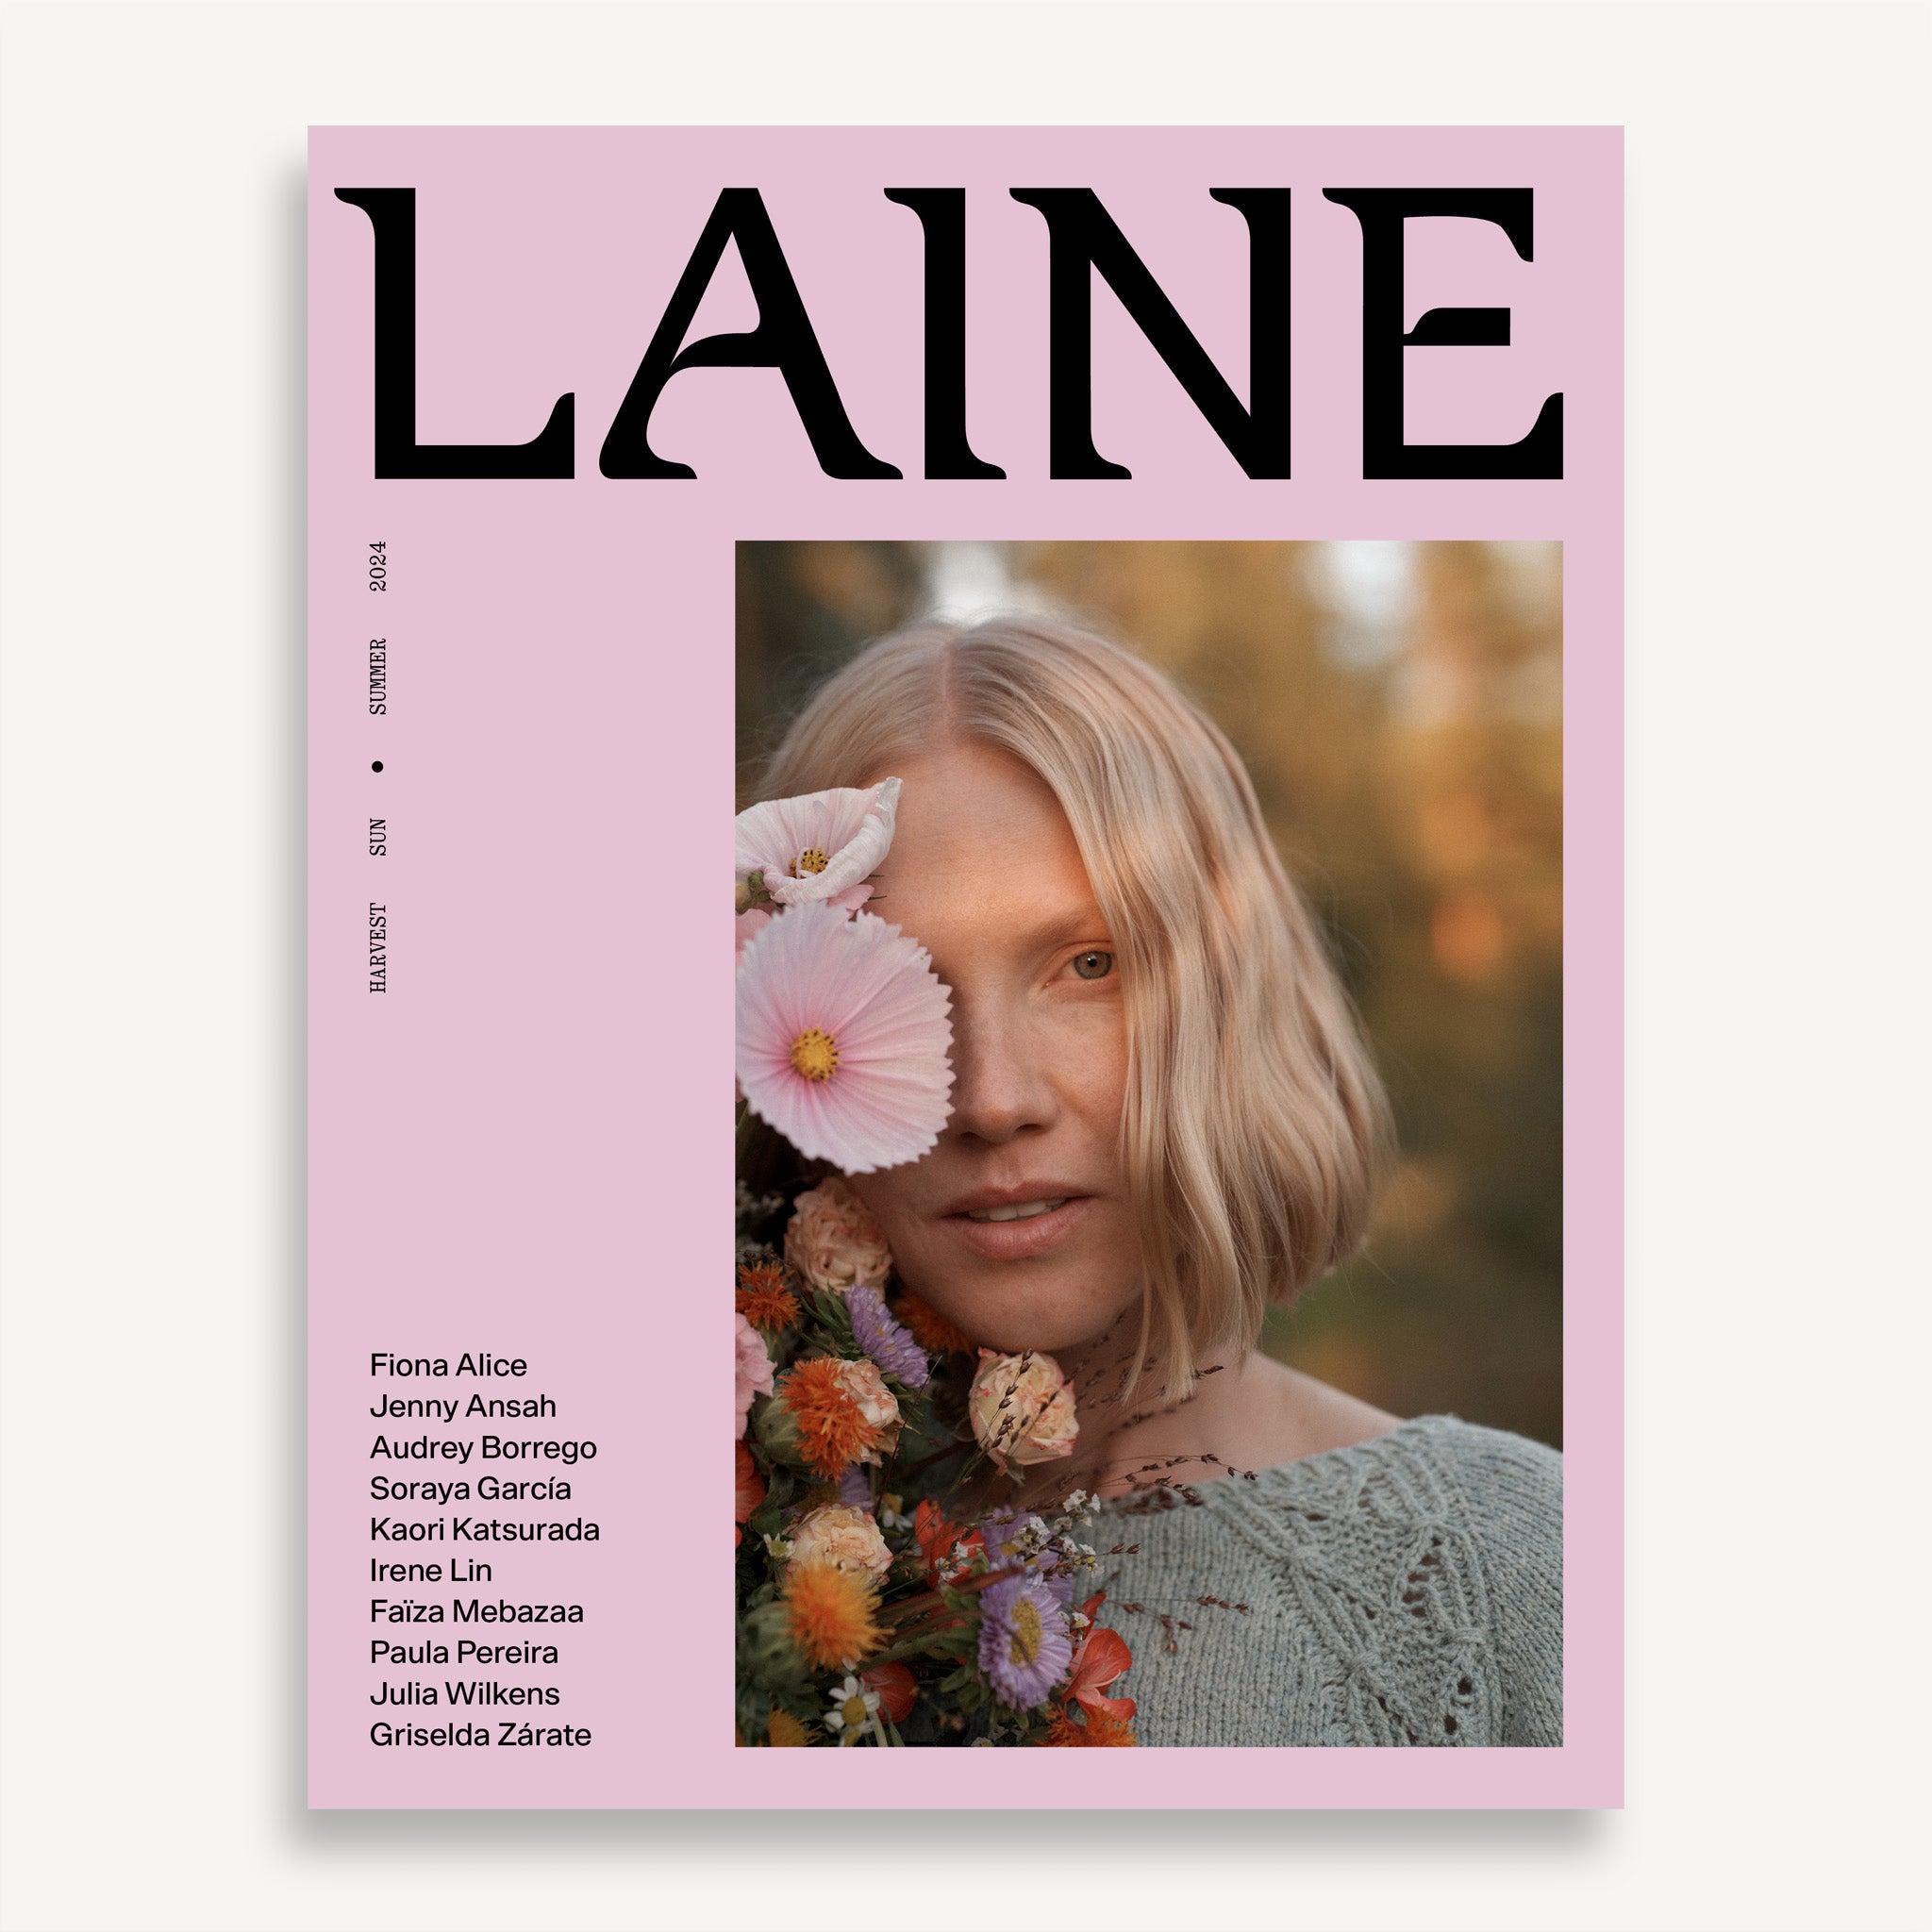 Laine Magazine 21